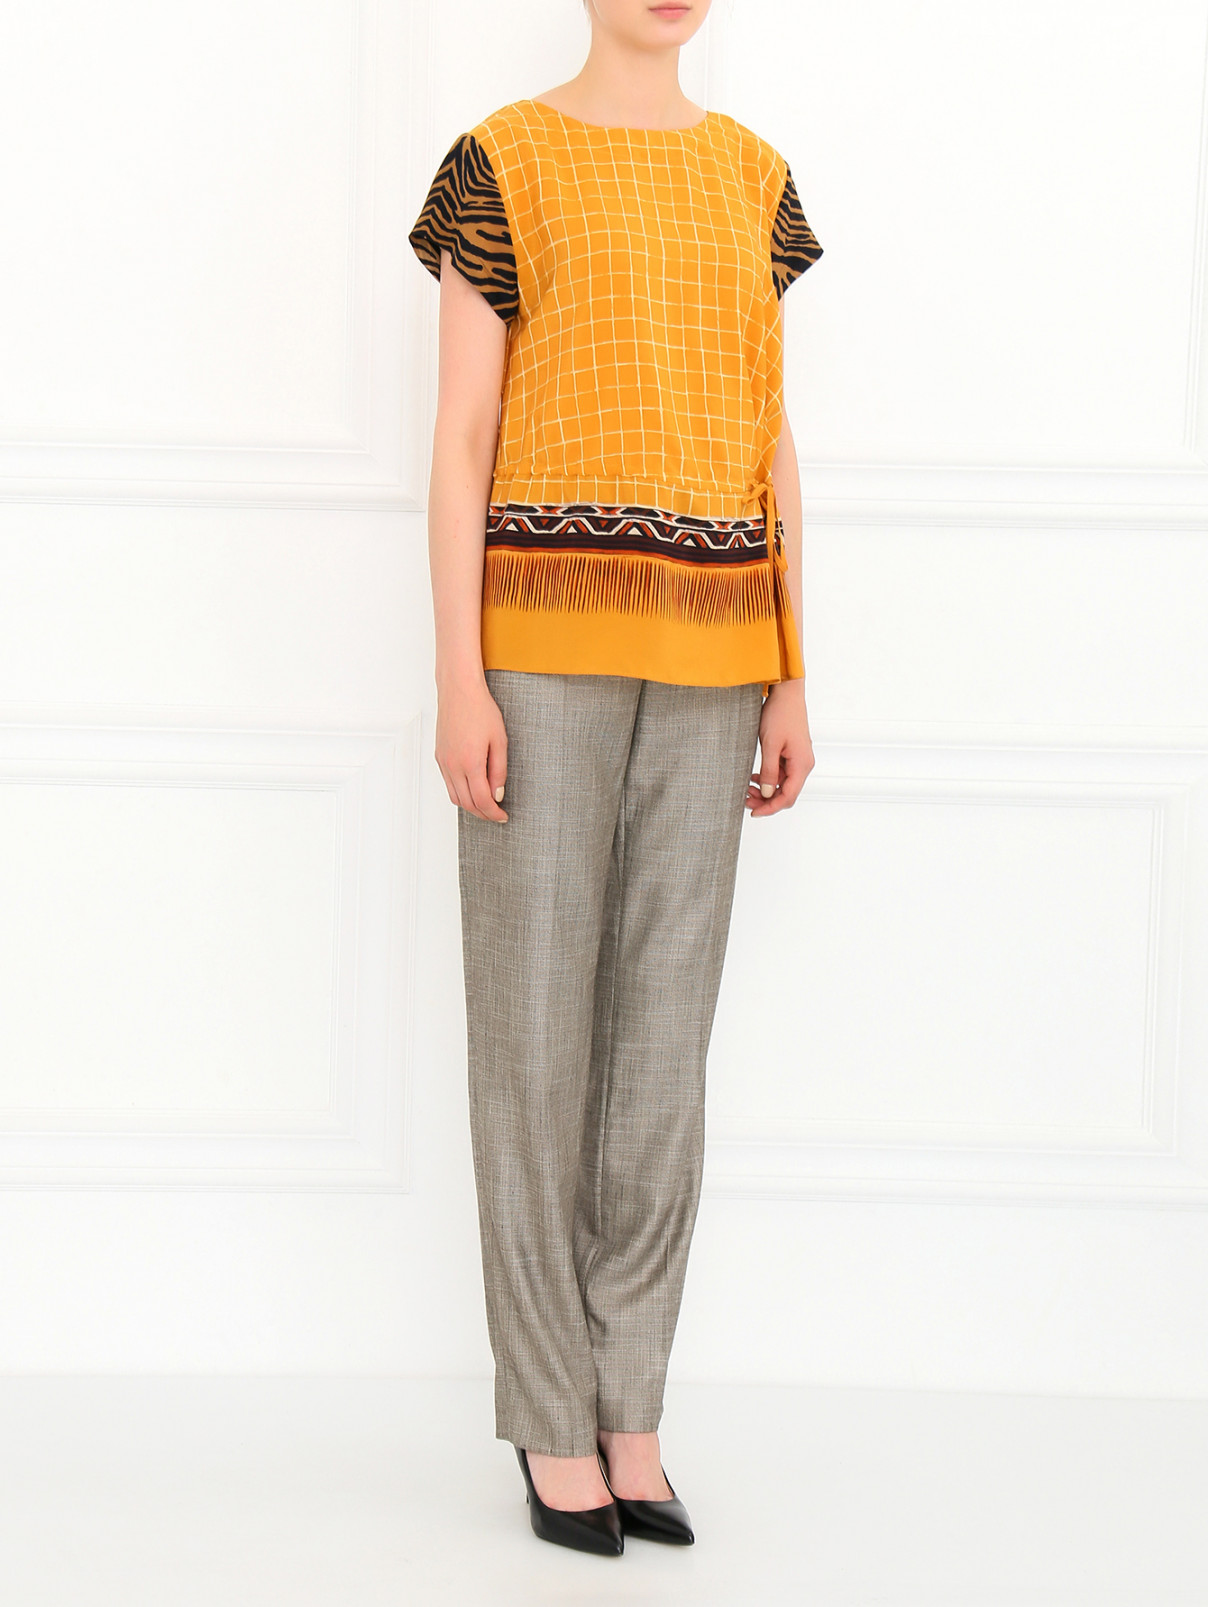 Блуза из шелка с узором Alberta Ferretti  –  Модель Общий вид  – Цвет:  Оранжевый